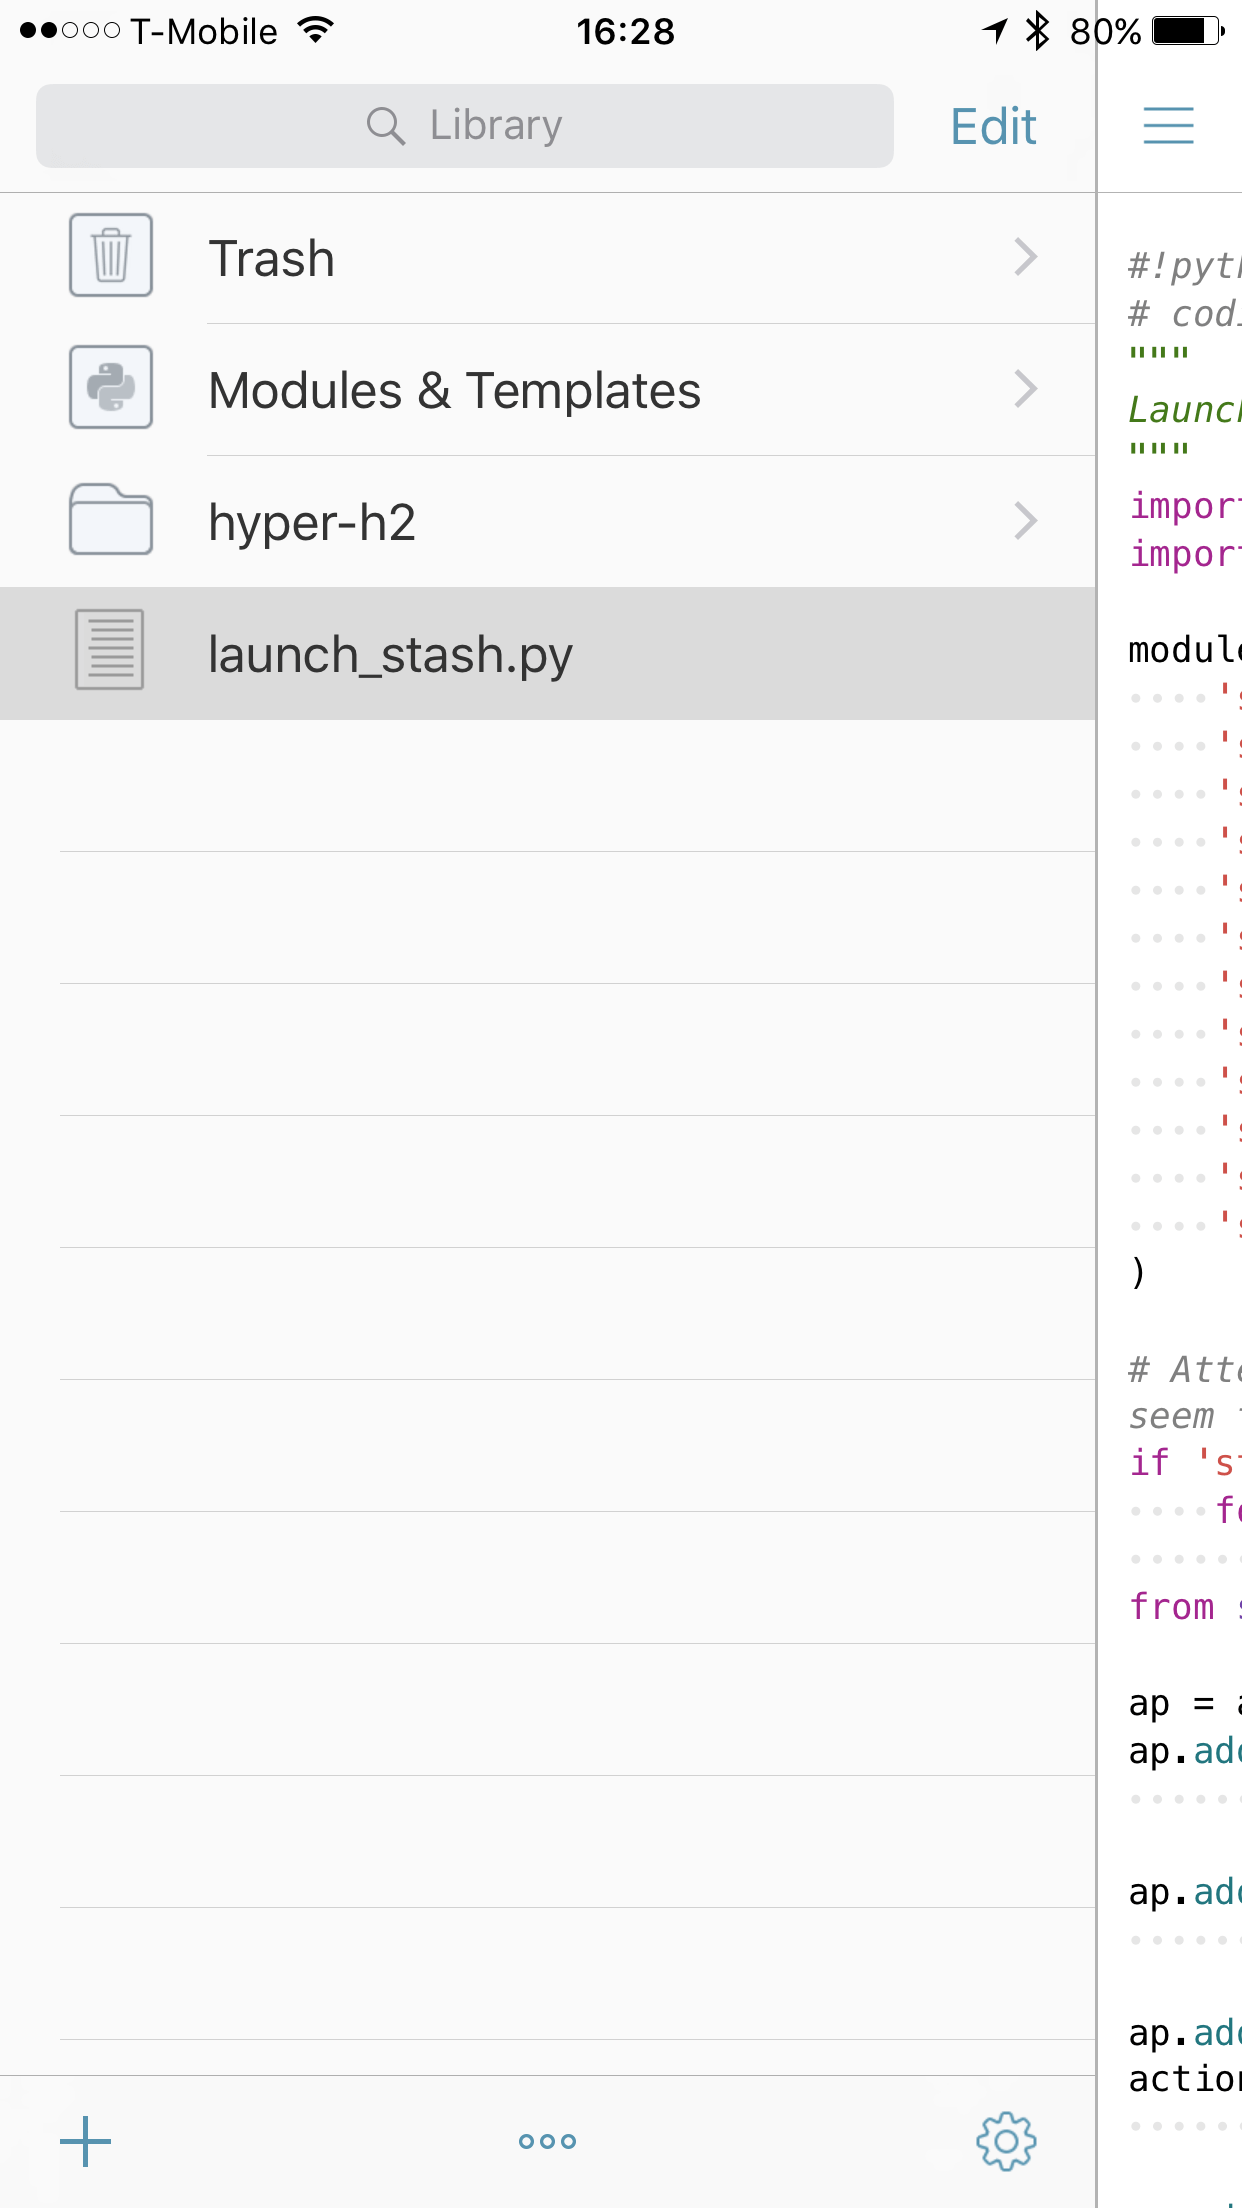 Sidebar containing a hyper-h2 folder